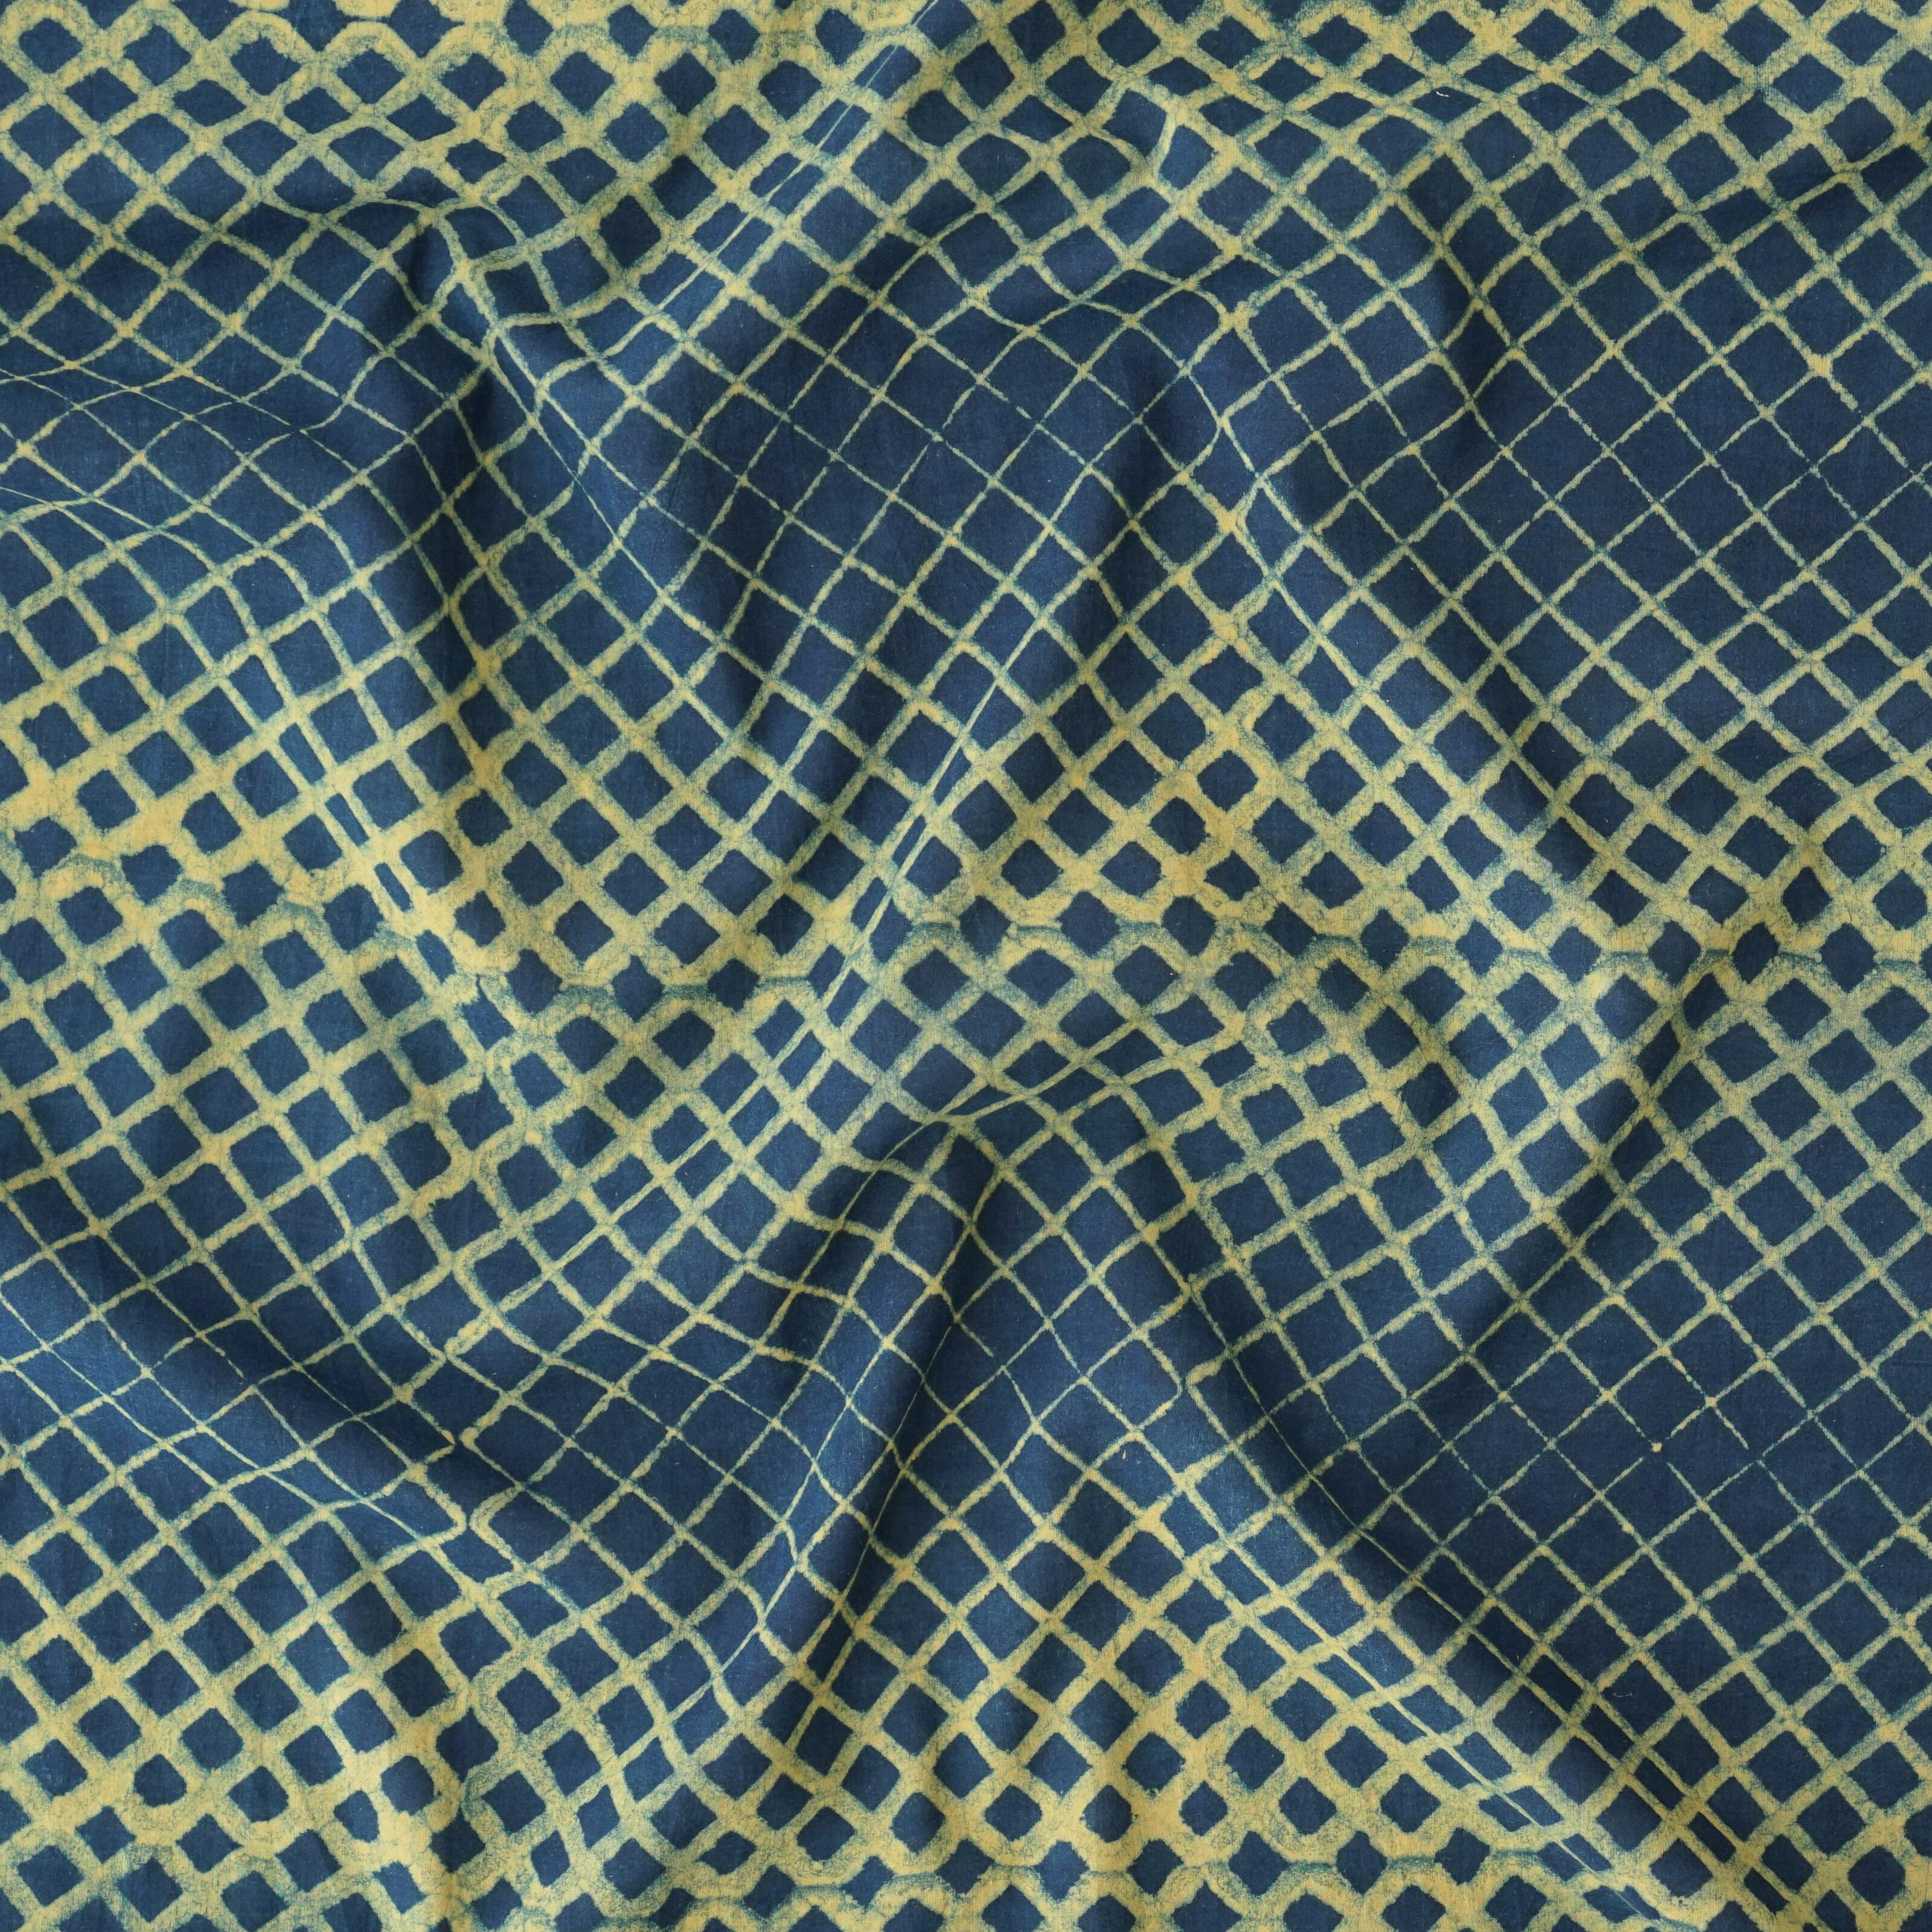 1 - AHM46 - Block-Printed Cotton - Fading Grid Print - Indigo Blue & Tamarisk Yellow Dyed - Contrast